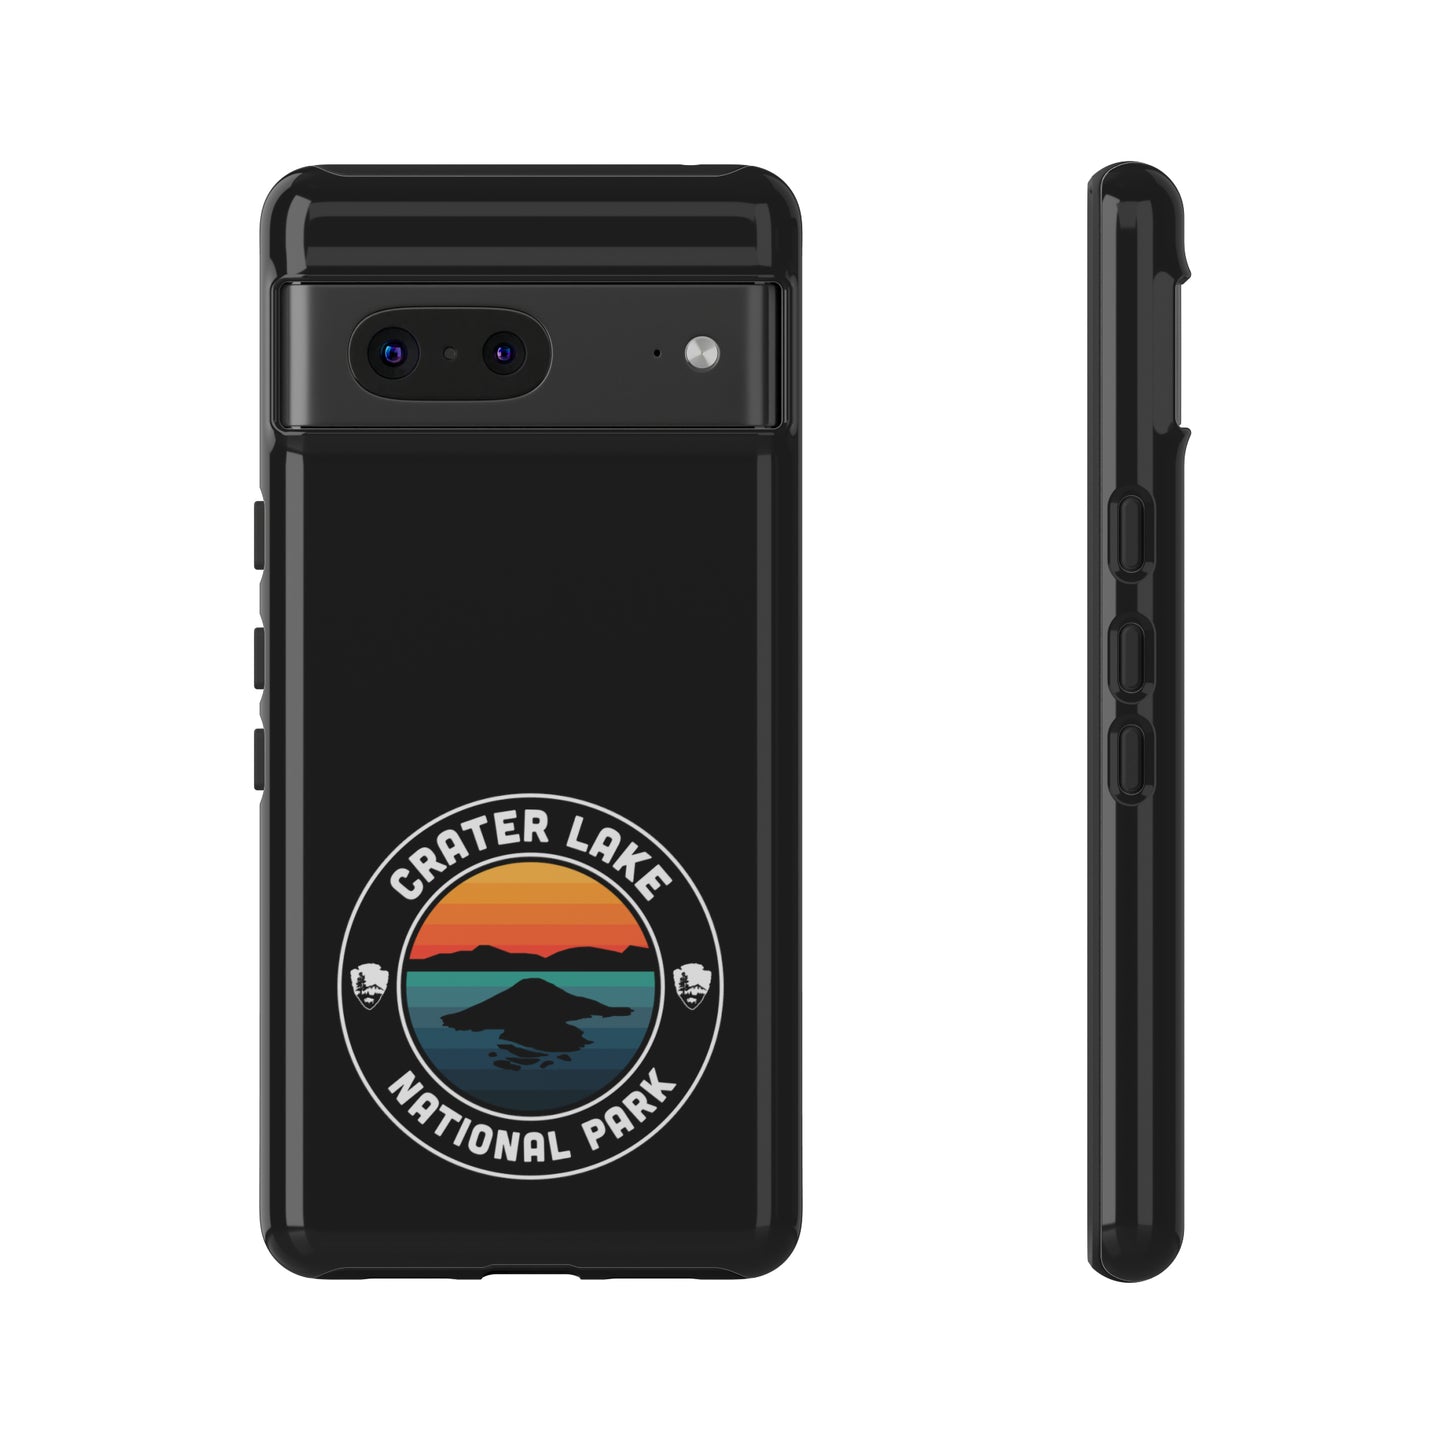 Crater Lake National Park Phone Case - Round Emblem Design